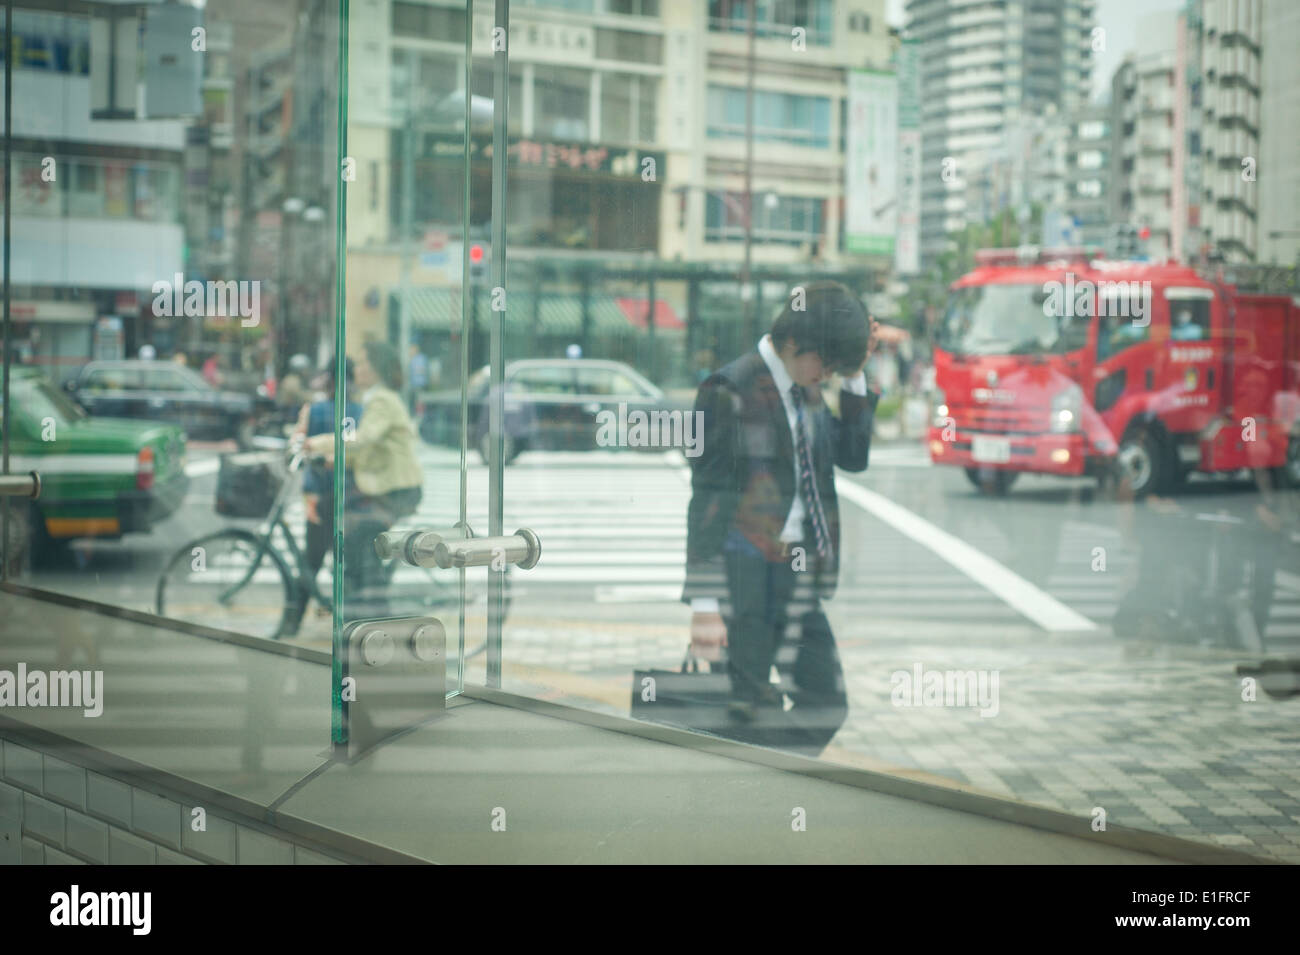 Tokyo, Japan - Street scene business men talking on phone through glasses Stock Photo